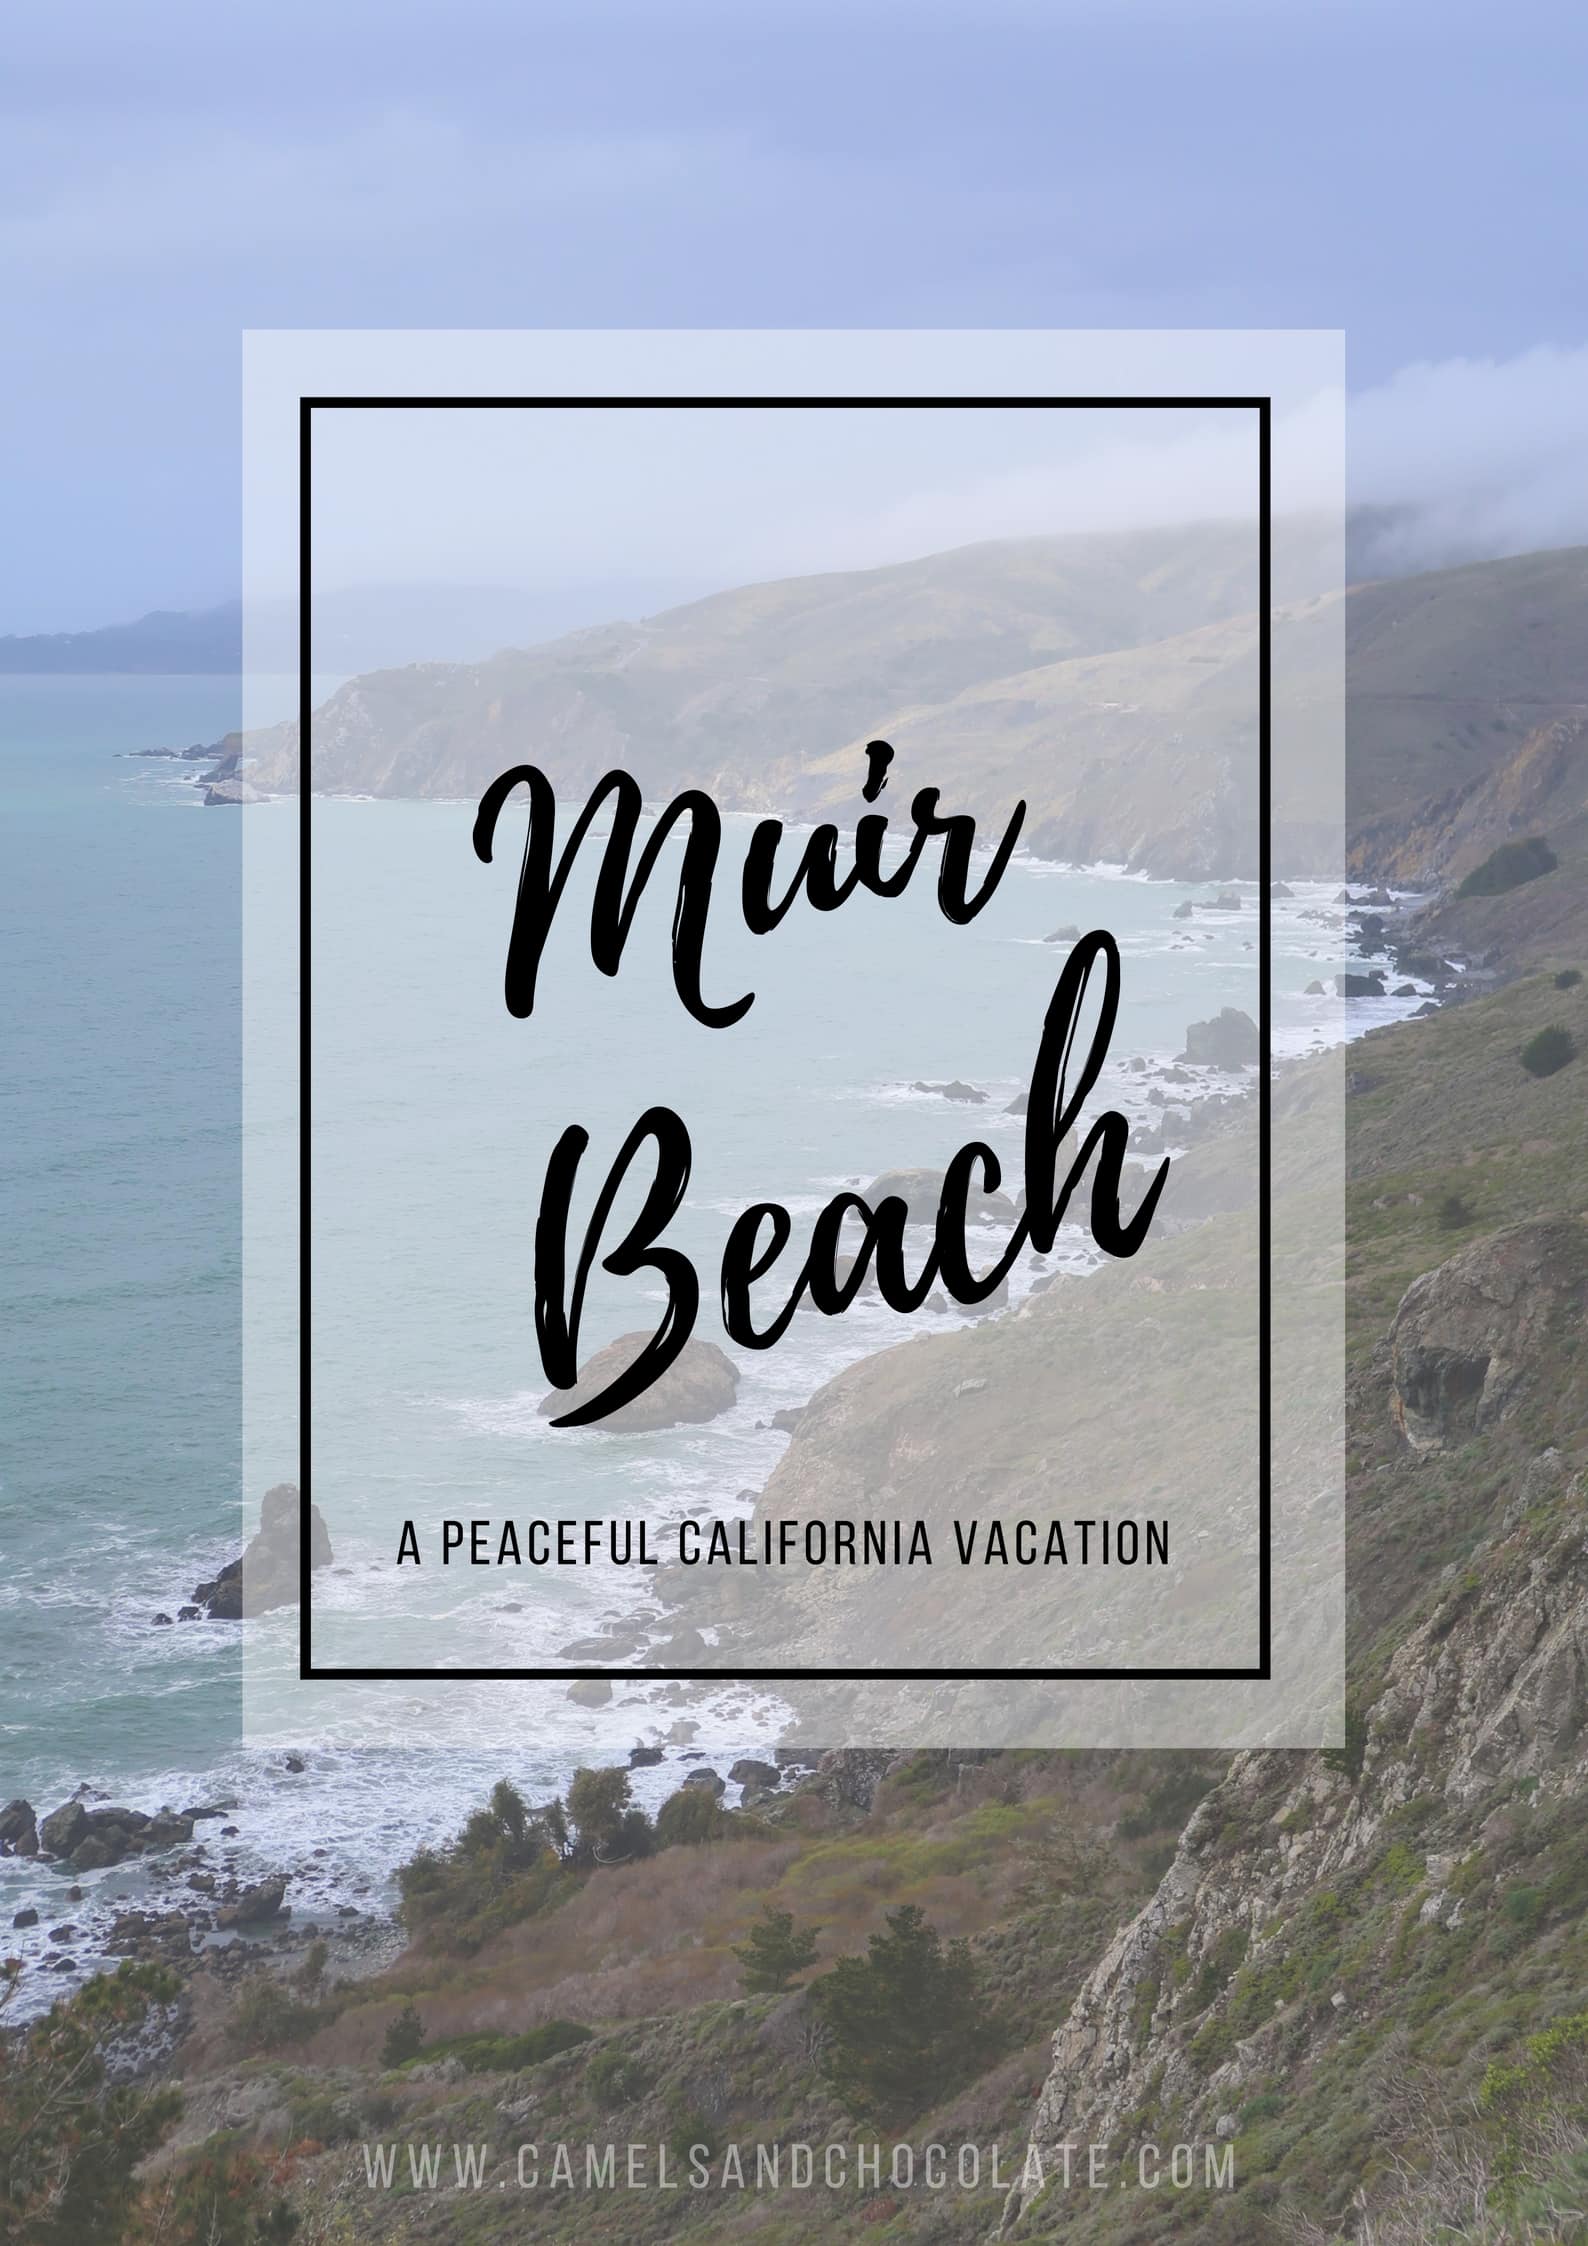 Muir Beach Overlook: California Travel